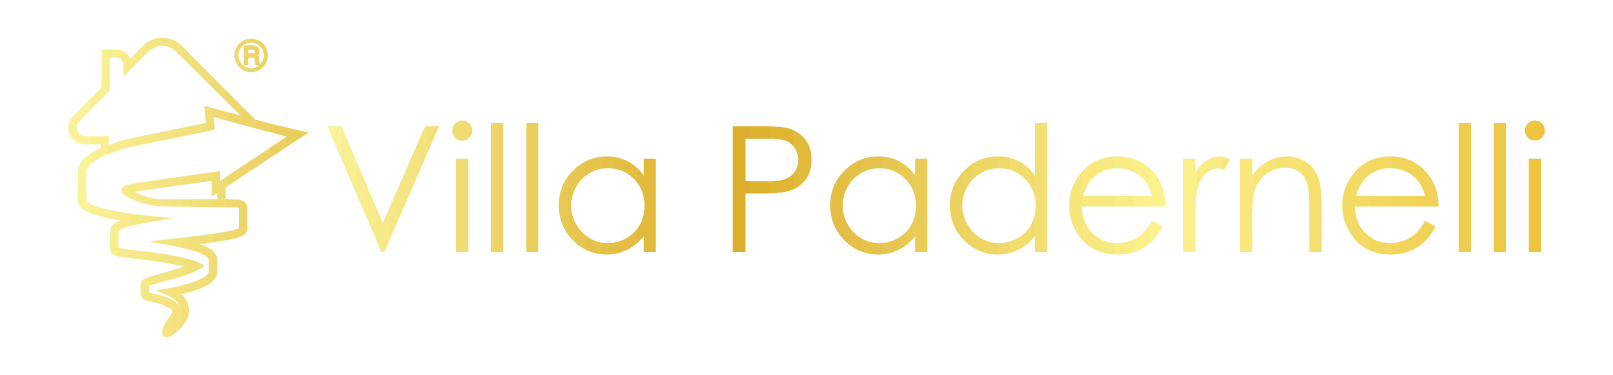 homelead-villa-padernelli-shiny-logo